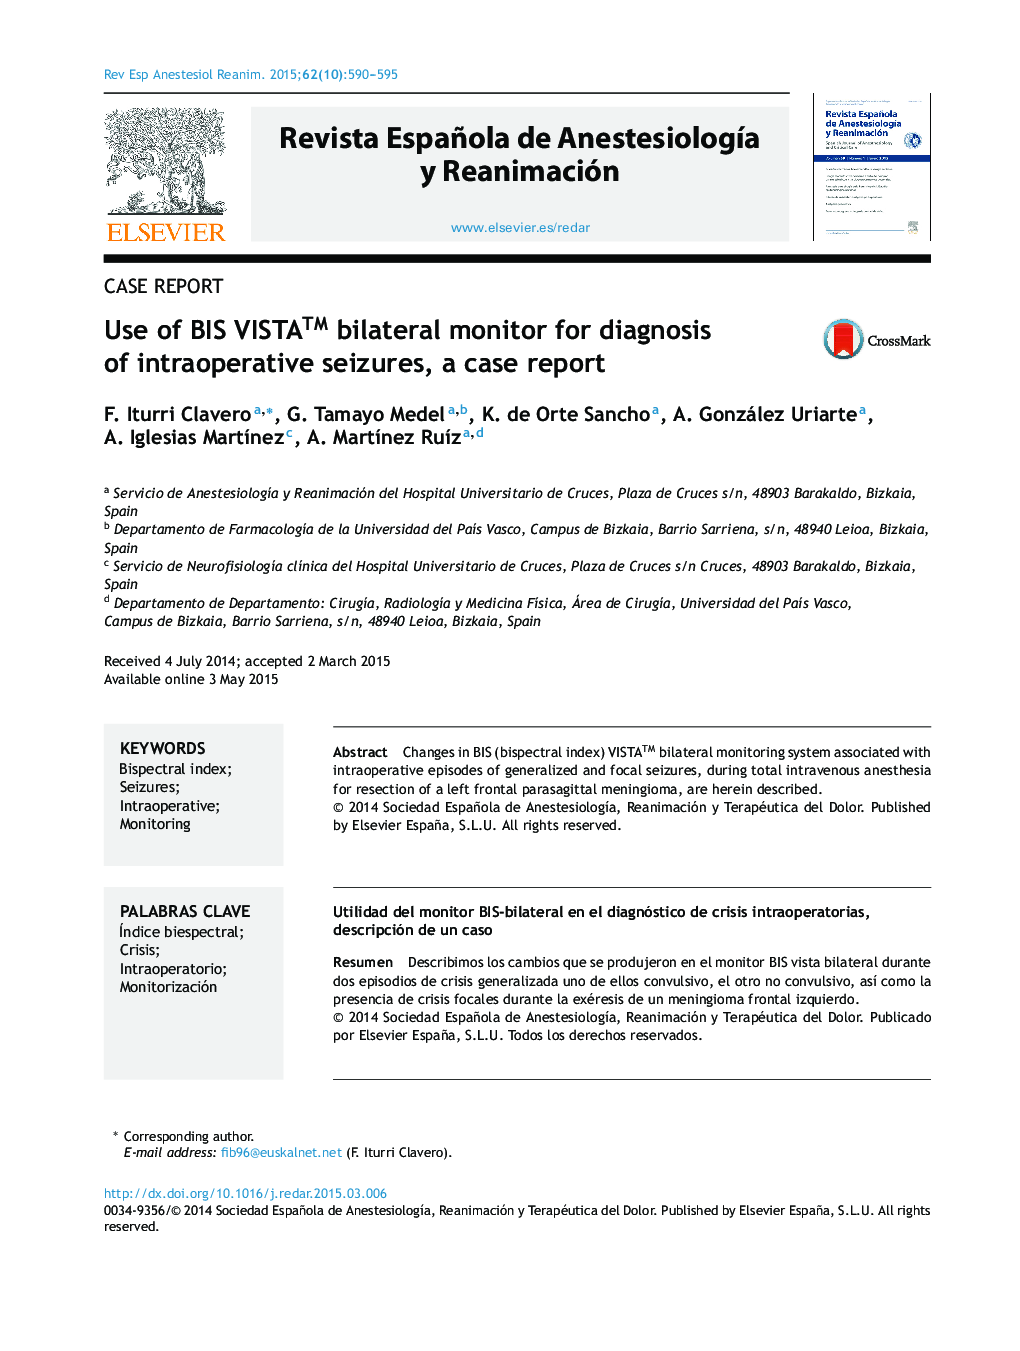 Use of BIS VISTAâ¢ bilateral monitor for diagnosis of intraoperative seizures, a case report